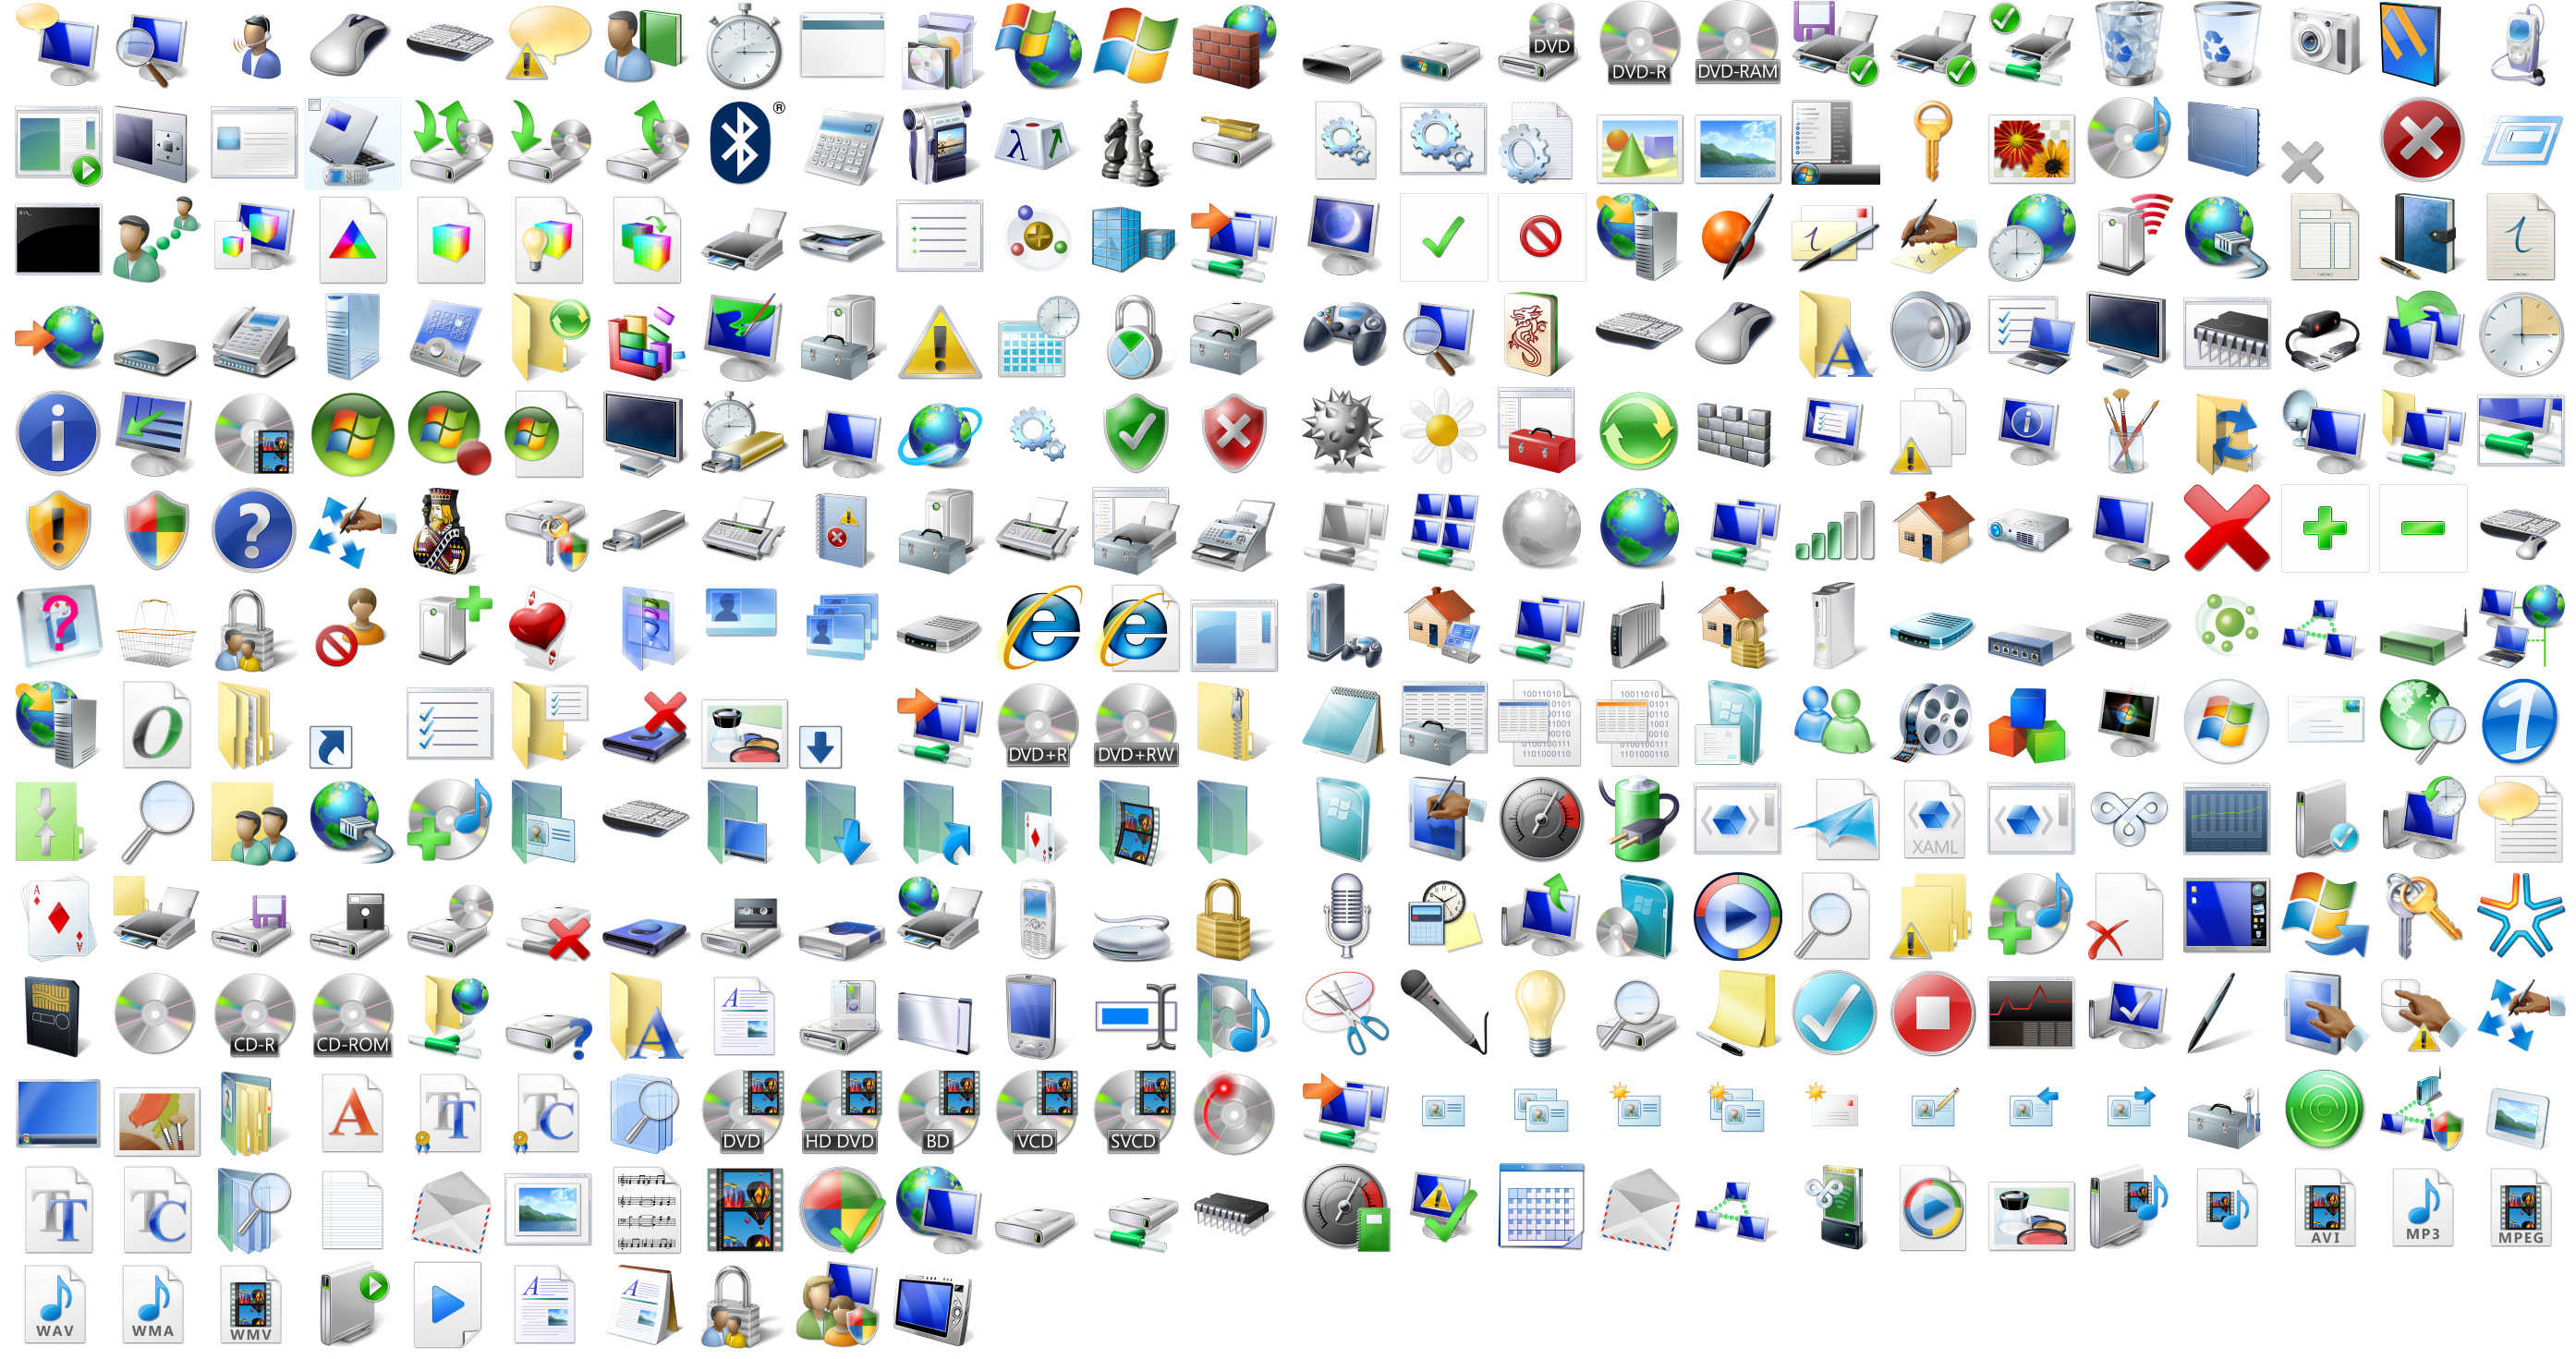 Windows Vista Icons